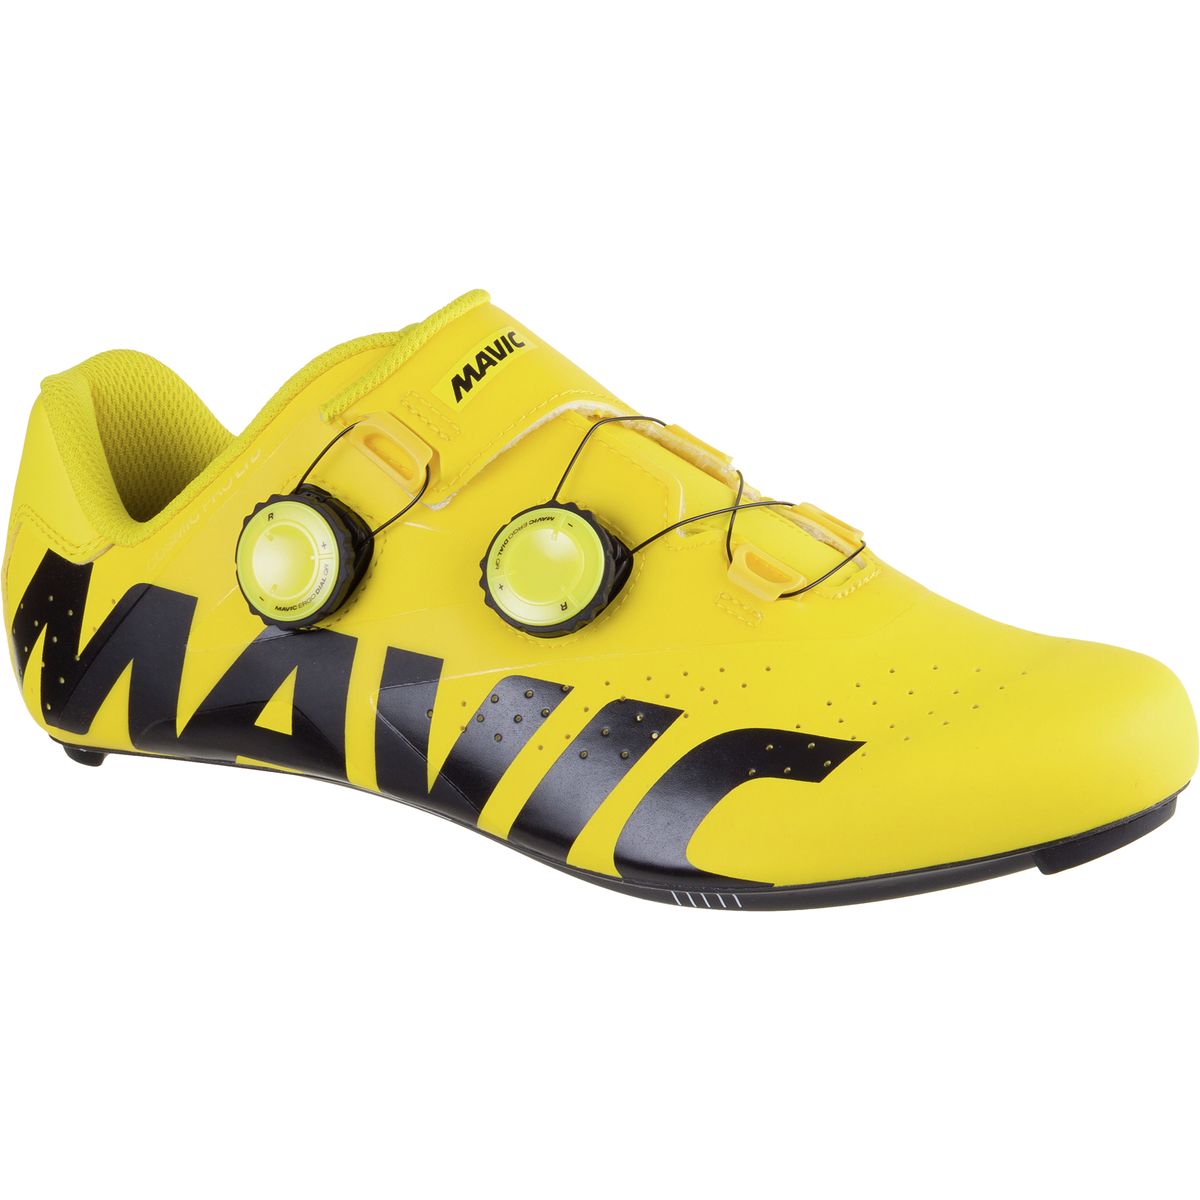 Cosmic LTD Cycling Shoe - Men's